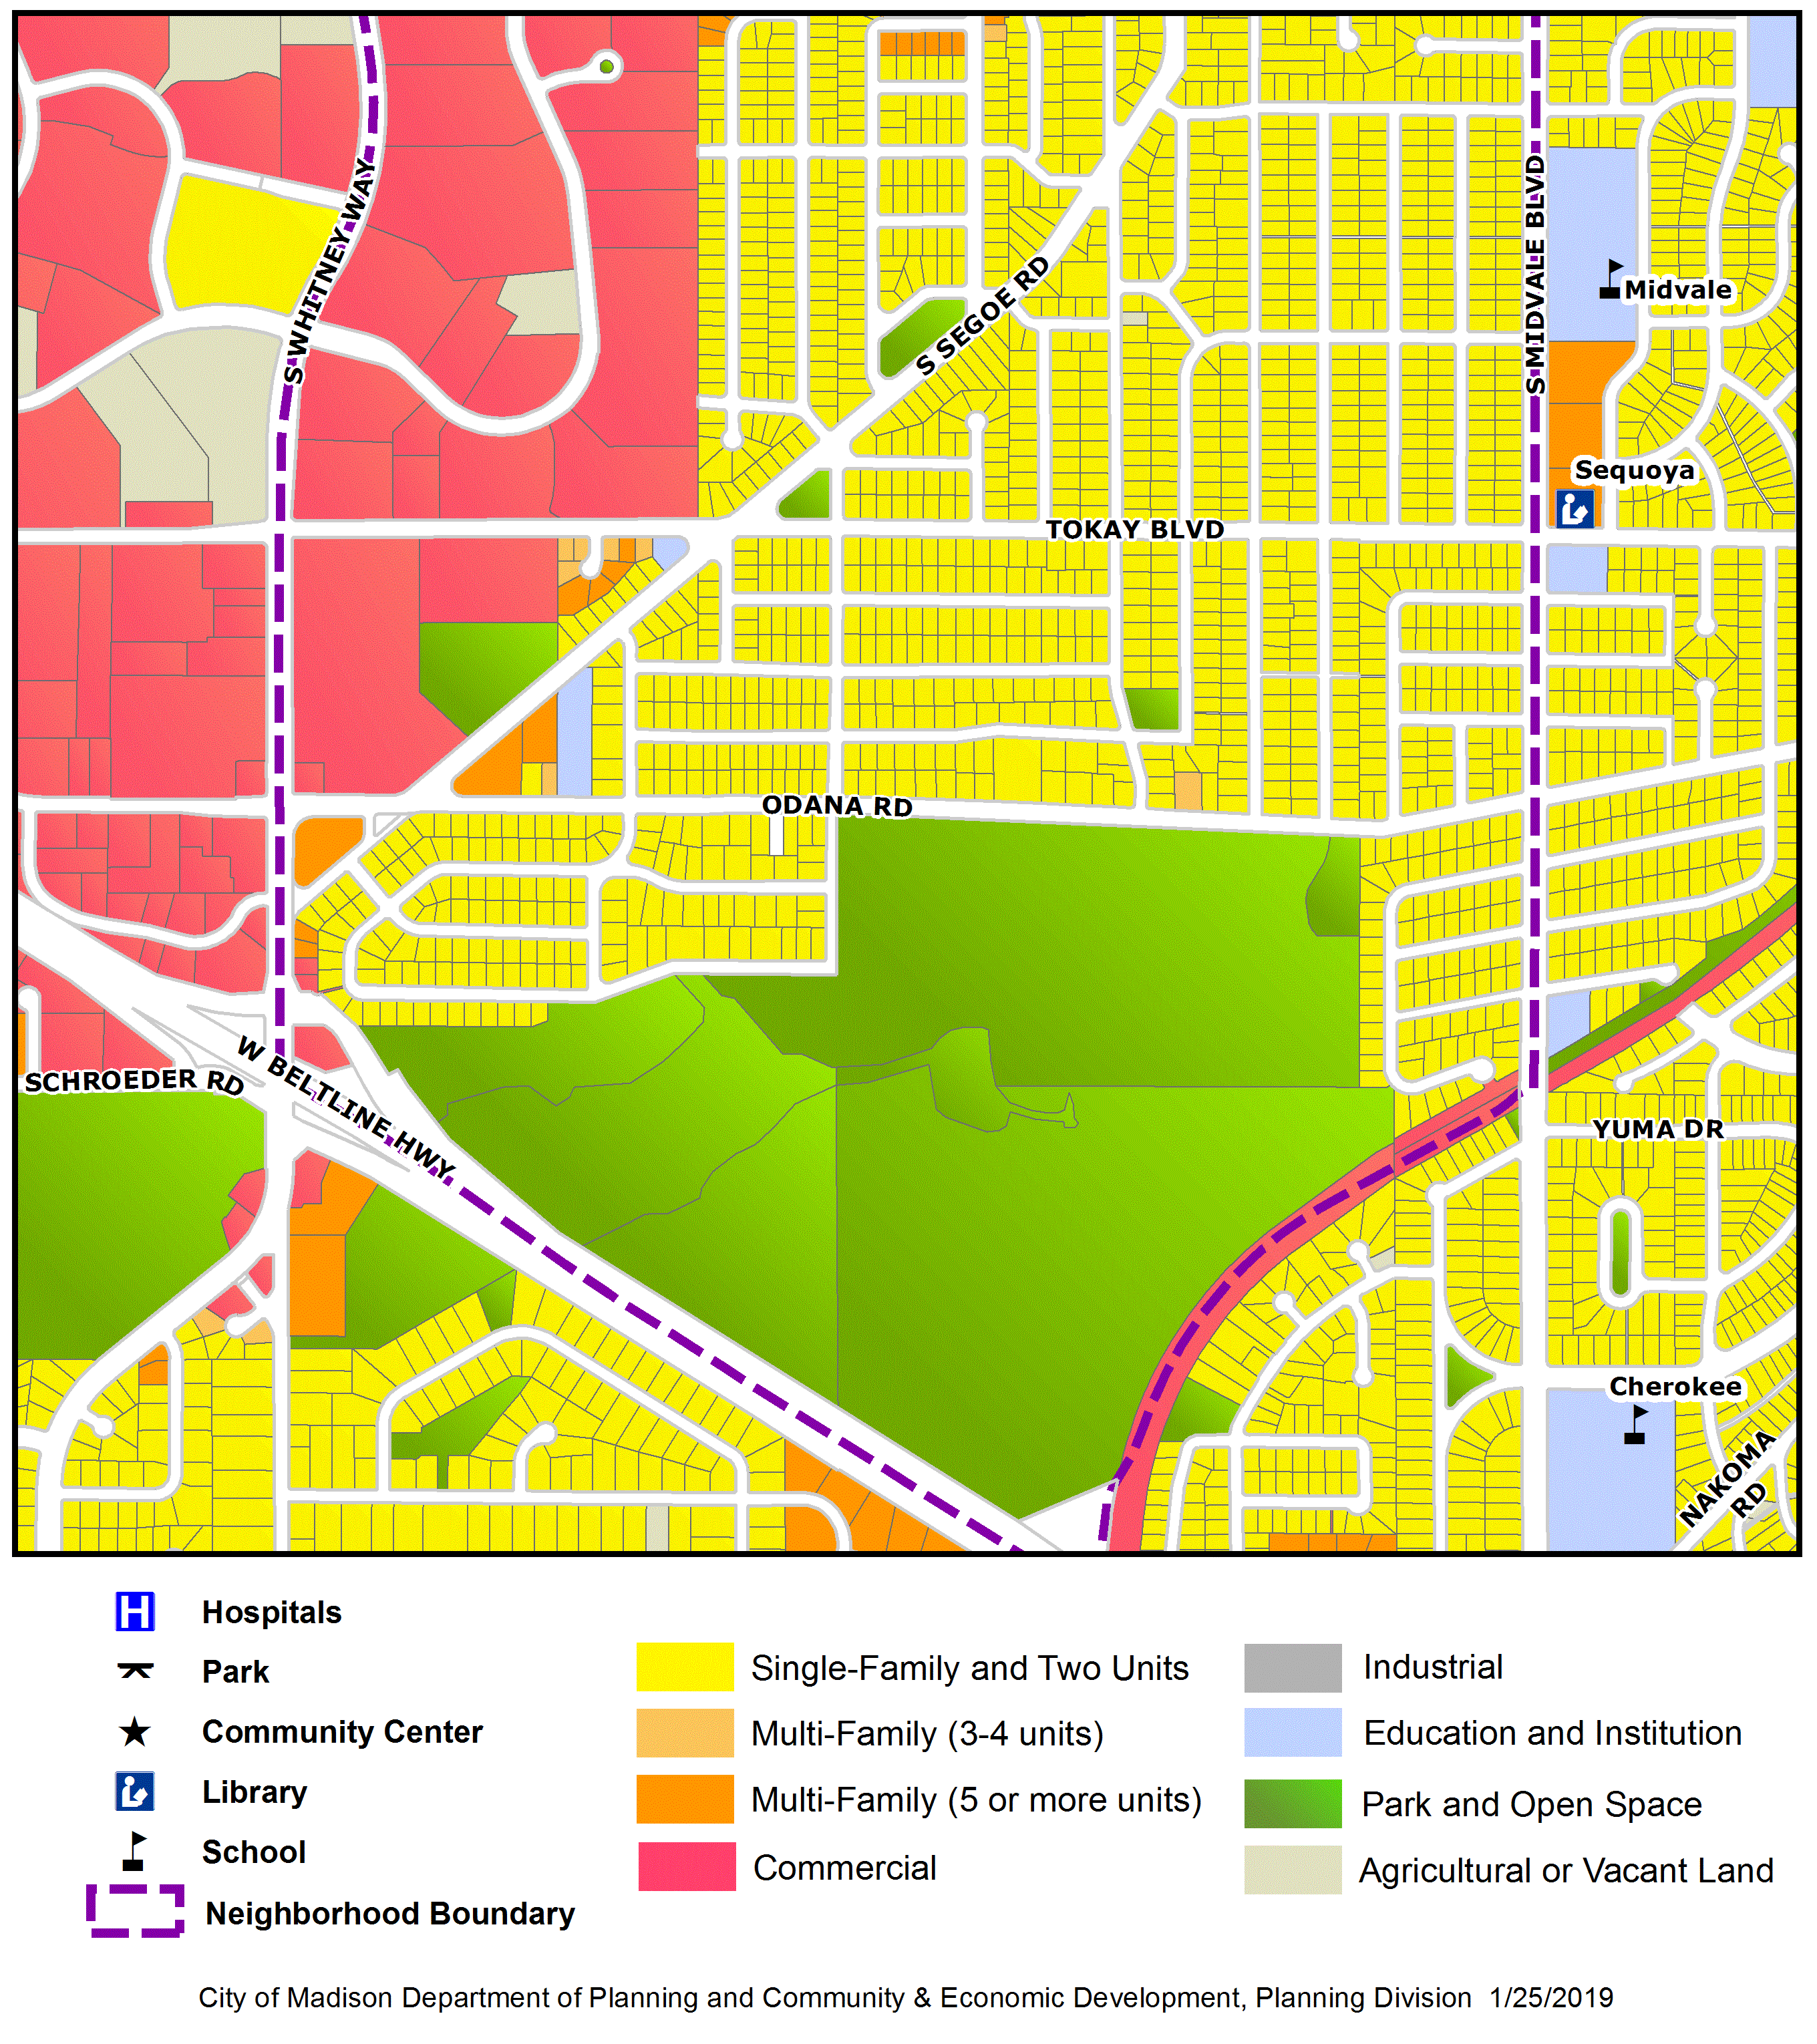 City of Madison's Midvale Heights Neighborhood map